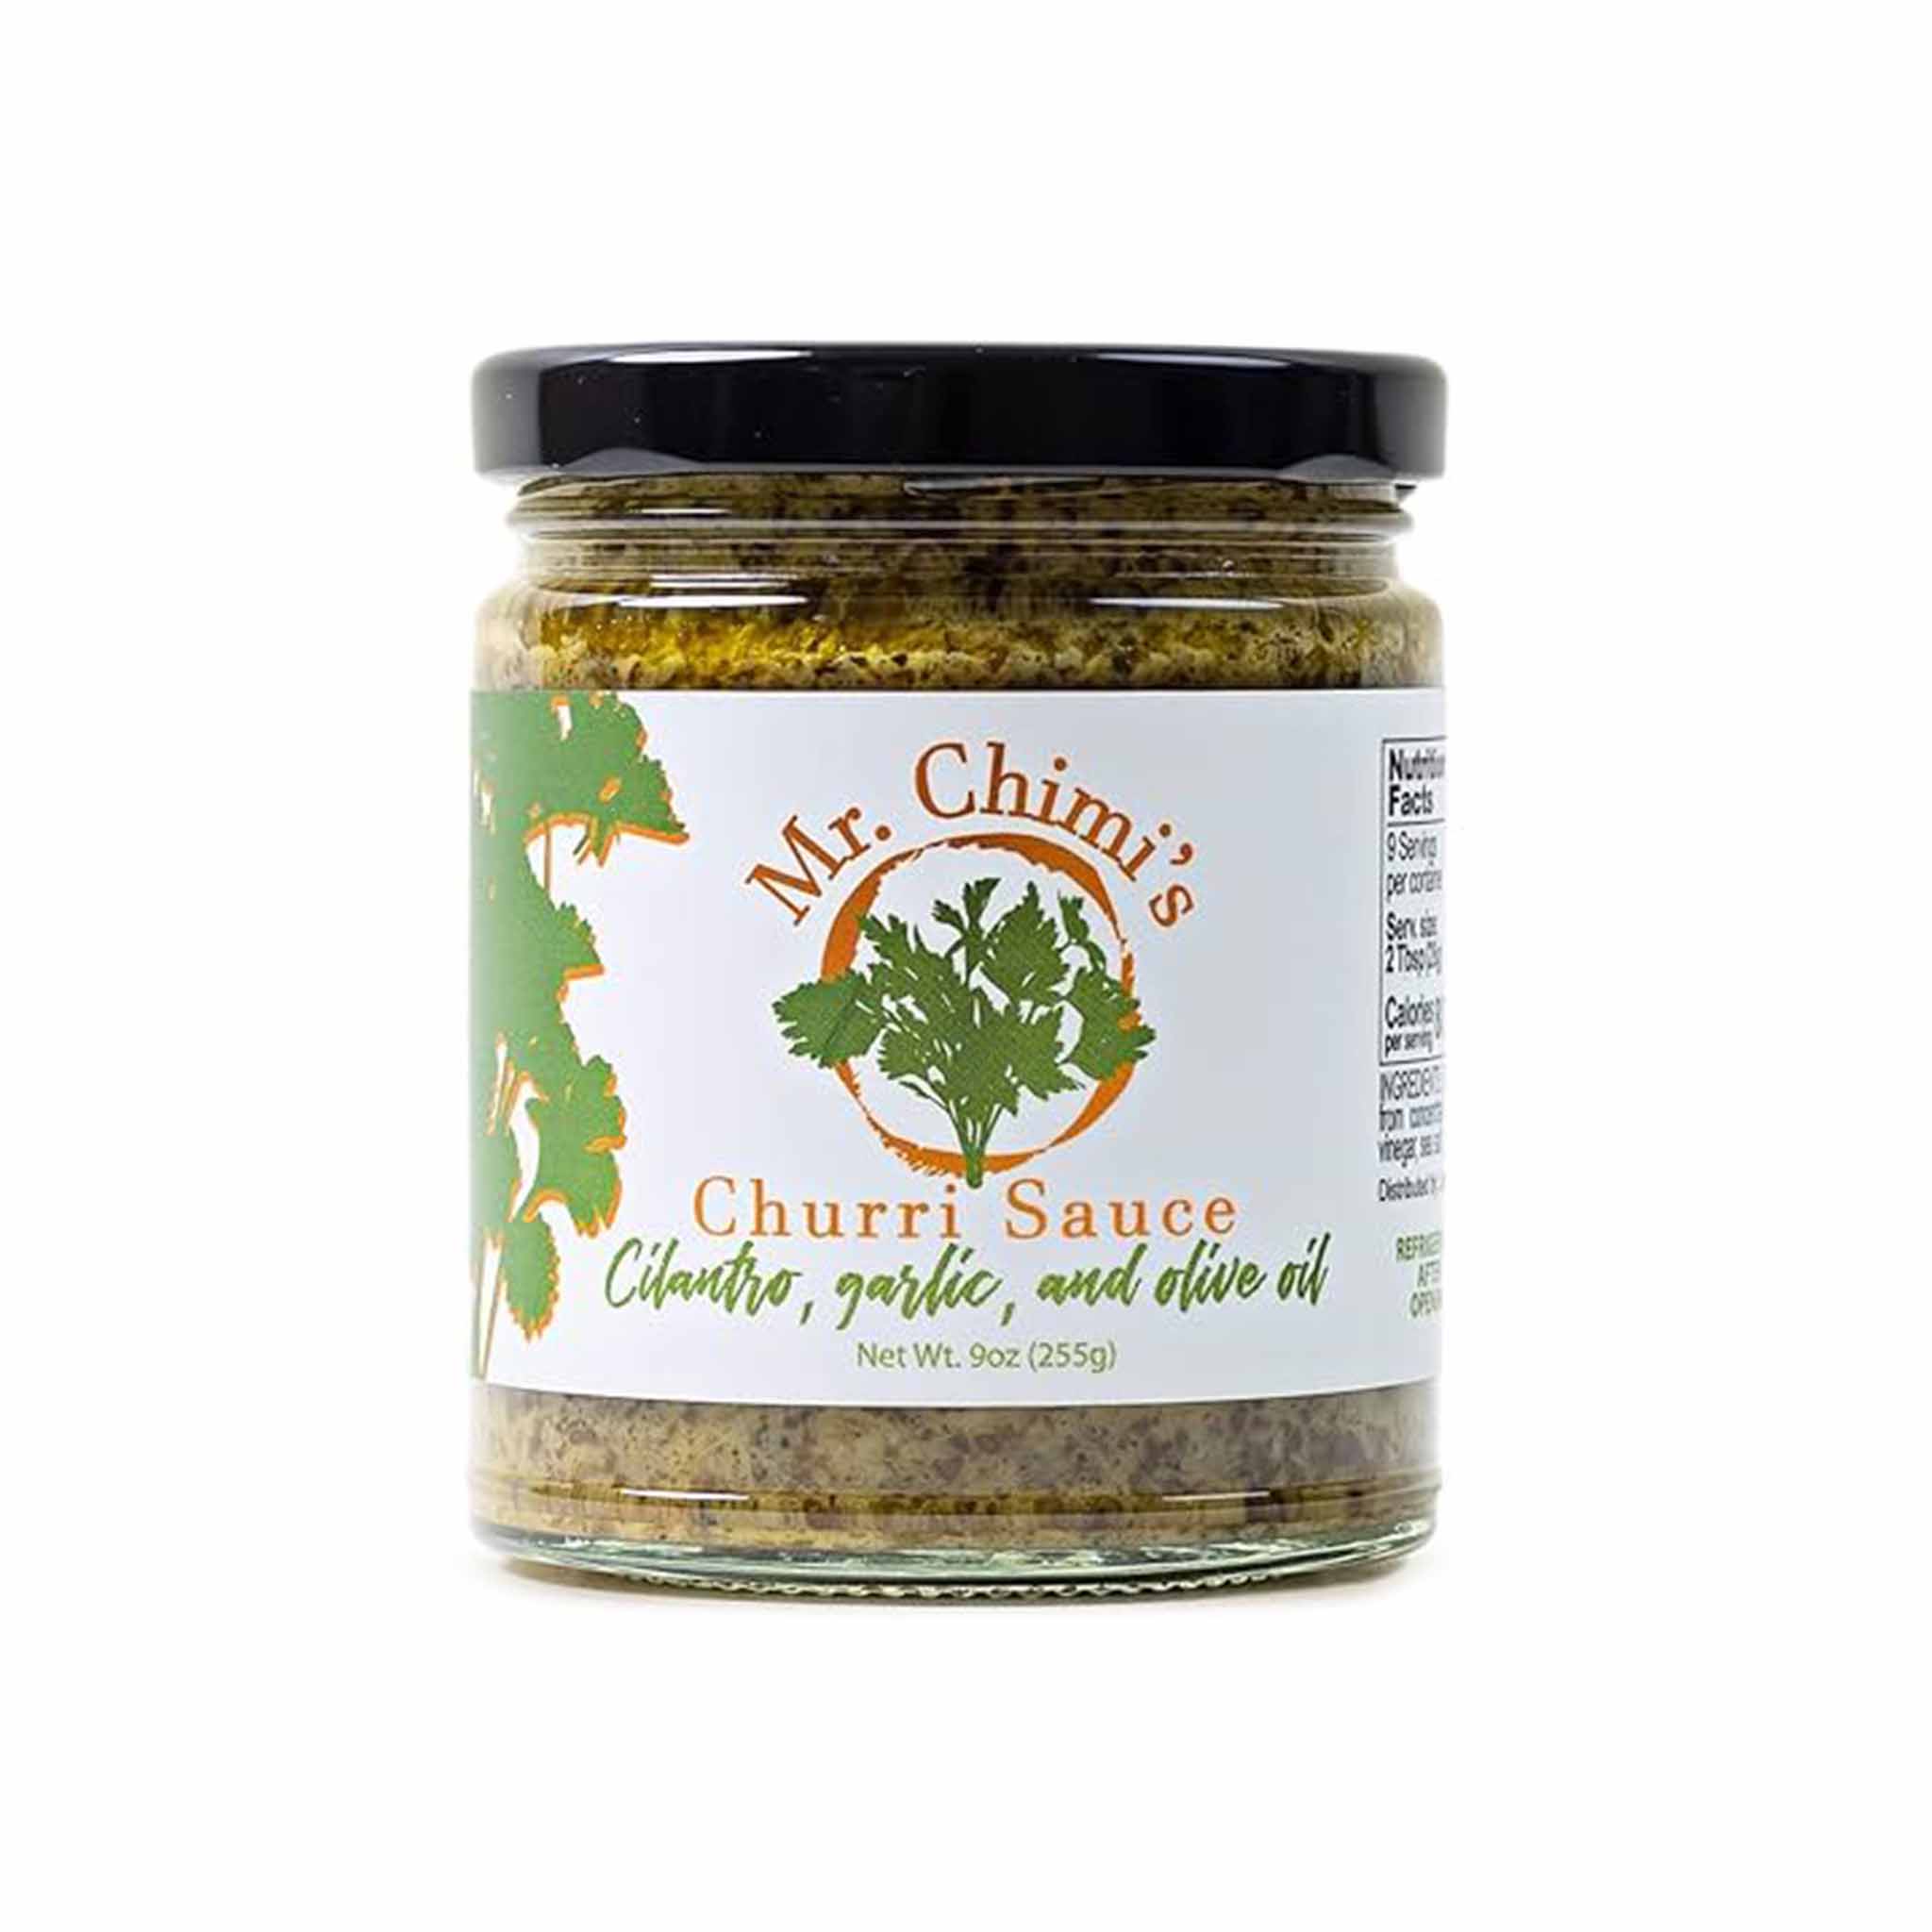 Mr. Chimi's Churri Sauce Cilantro Garlic and Olive Oil in a Jar